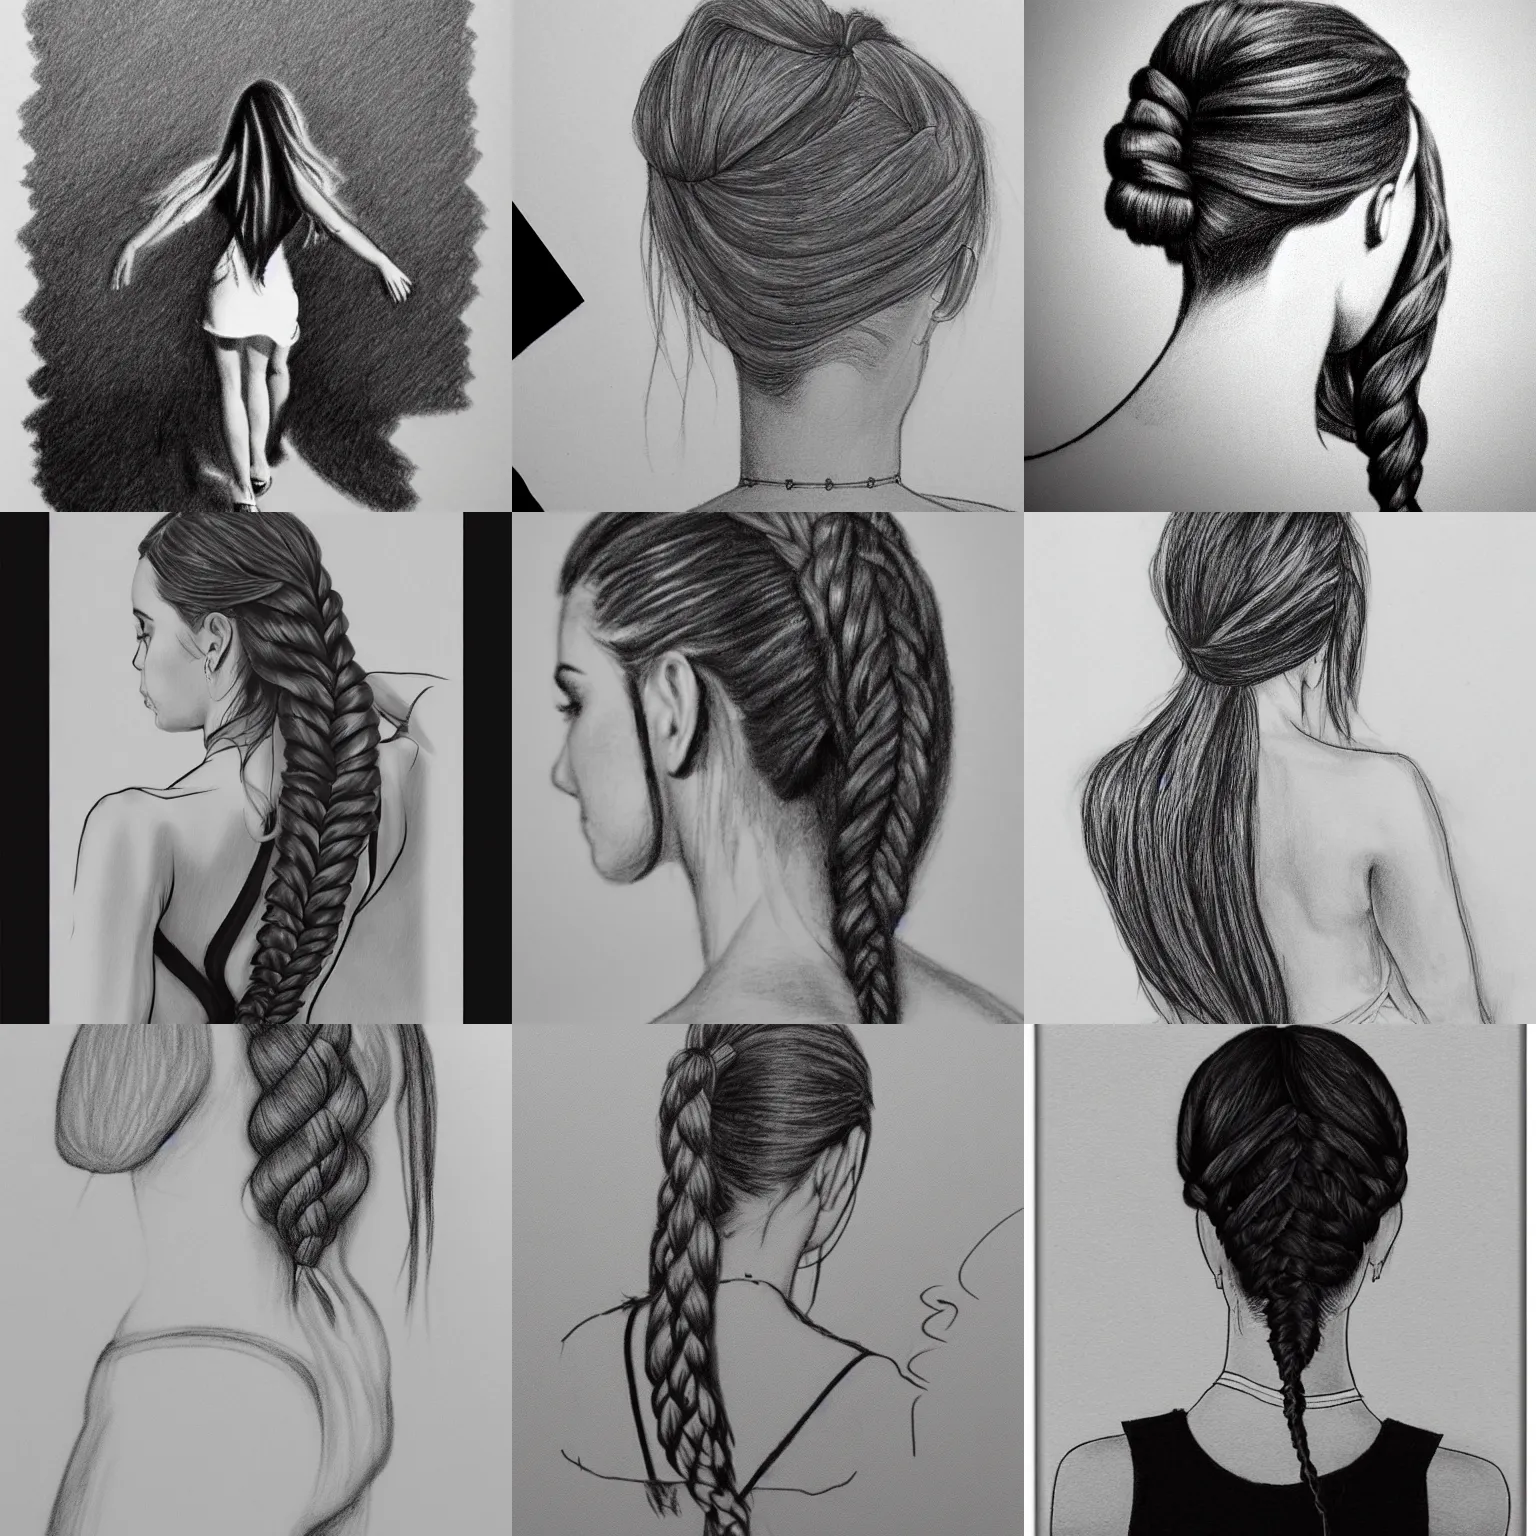 Prompt: woman girl plait hair back of head behind rear b&w black white pencil drawing artstation, open back dress